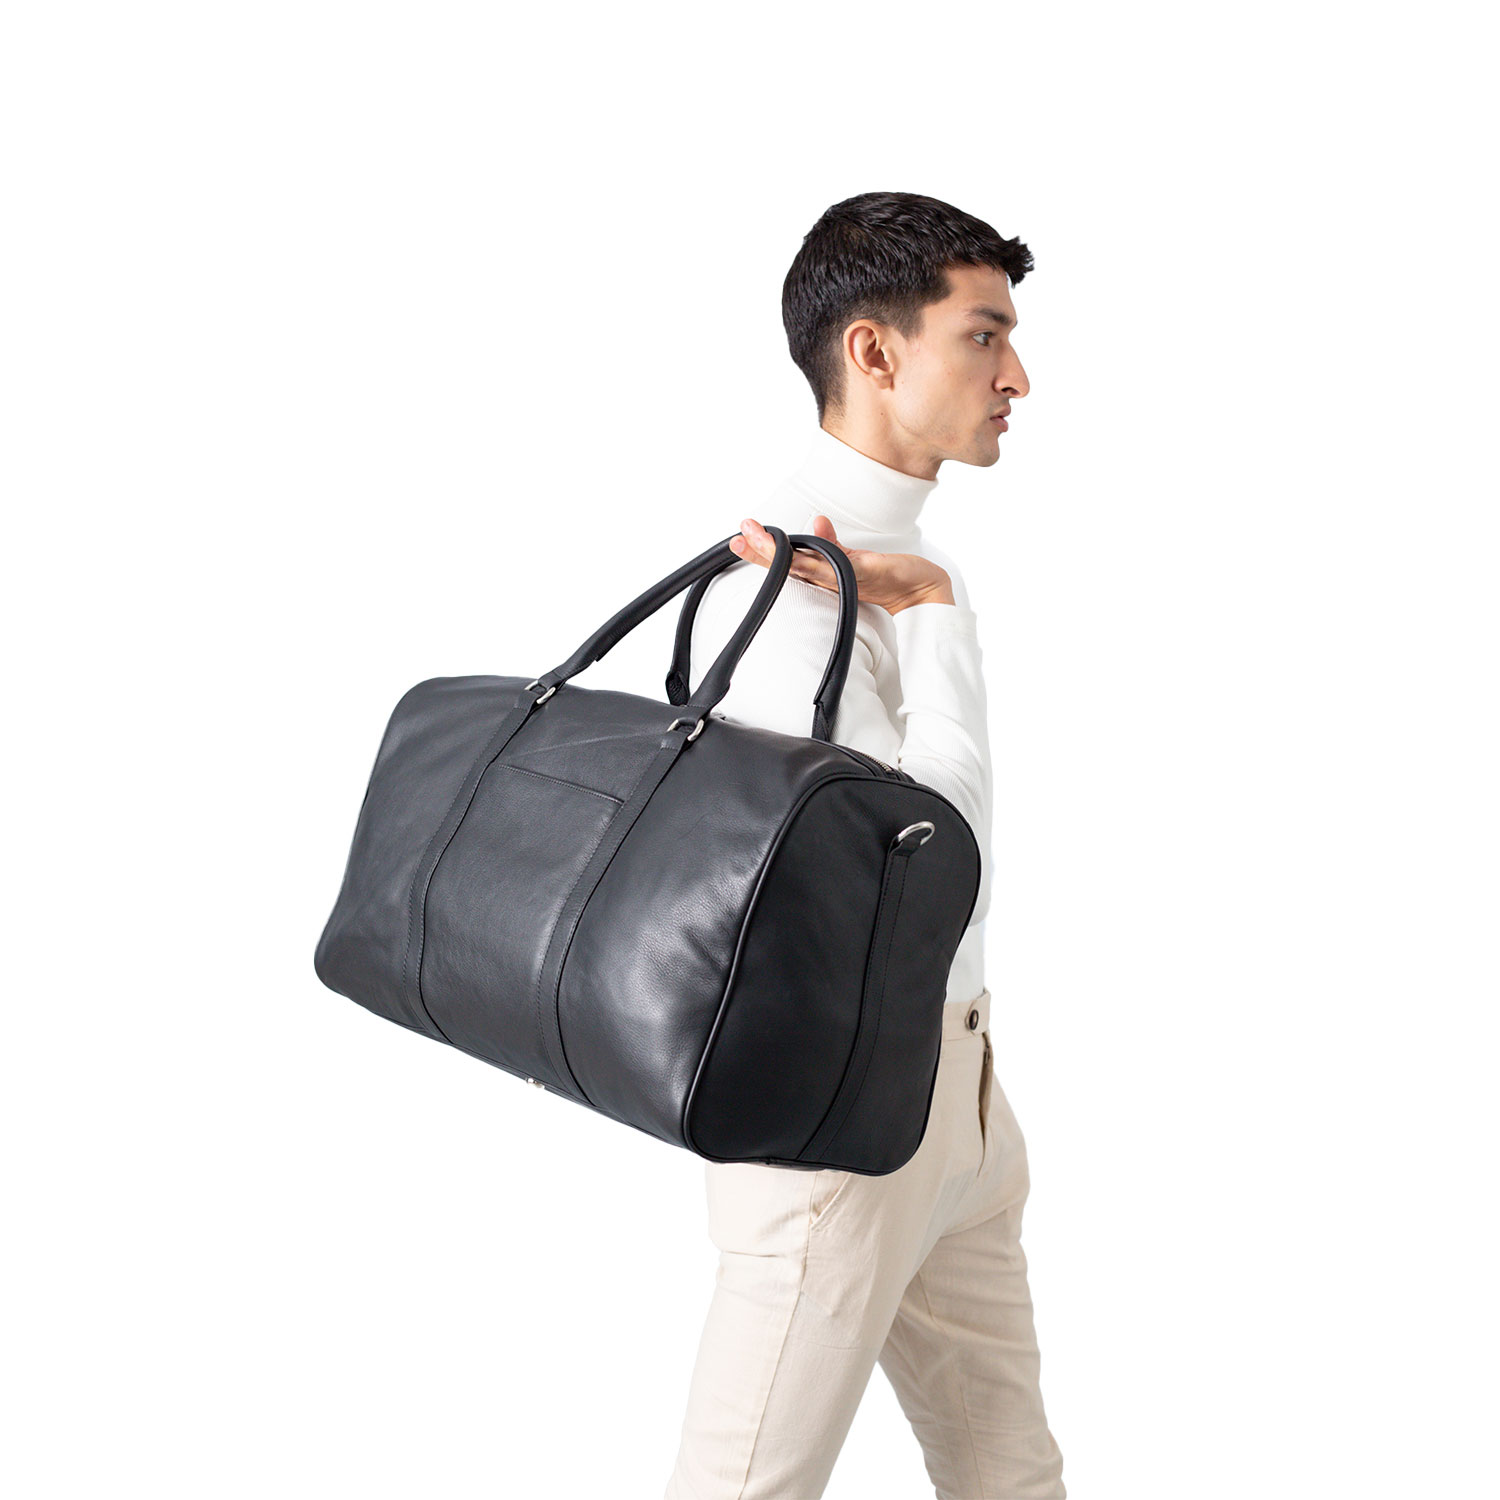 The Darrio Black Leather Duffle Bag